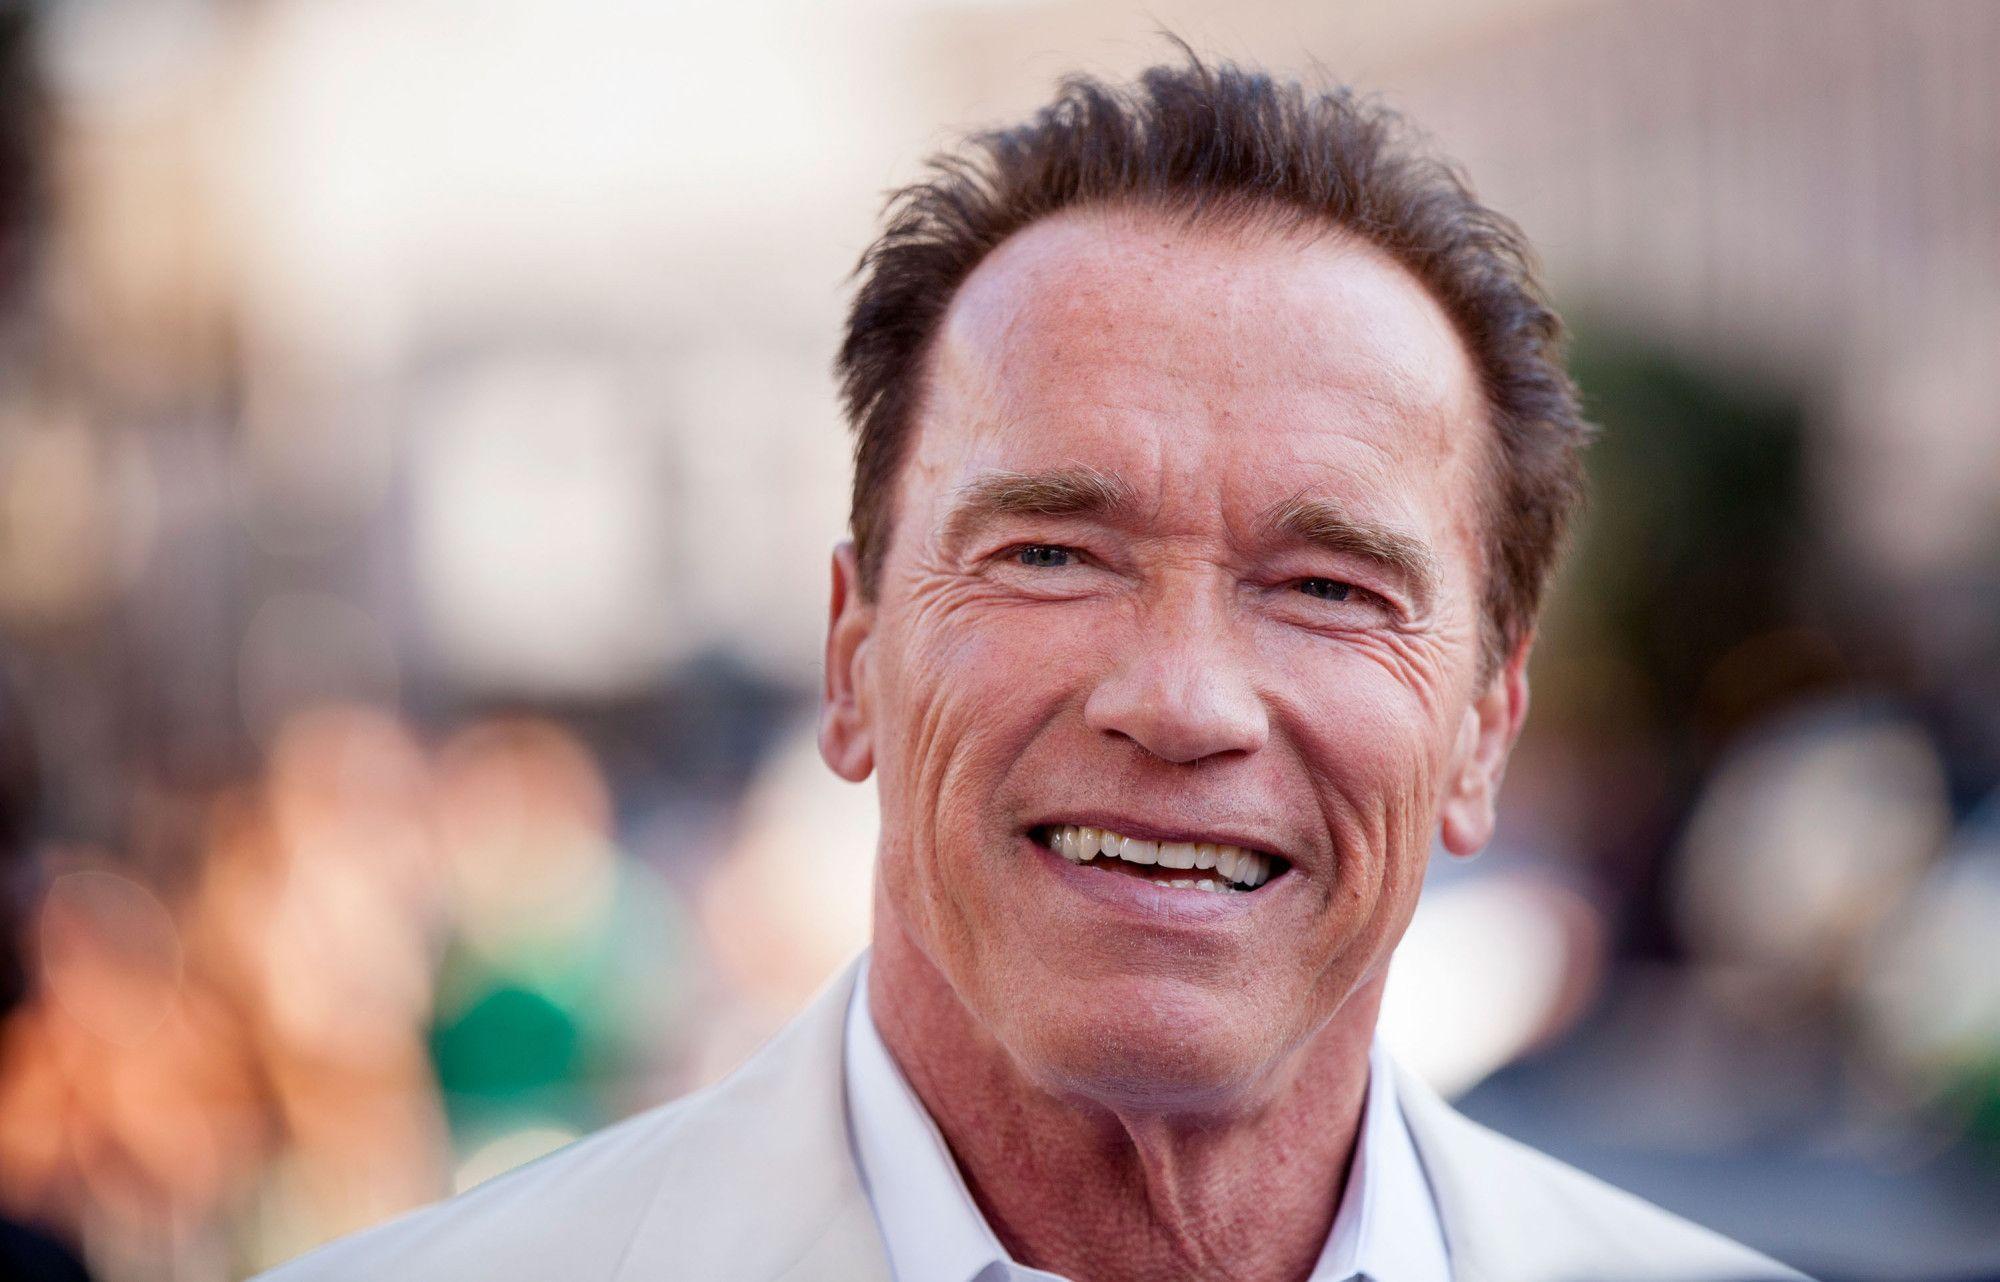 Arnold Schwarzenegger Wallpaper Image Photo Picture Background